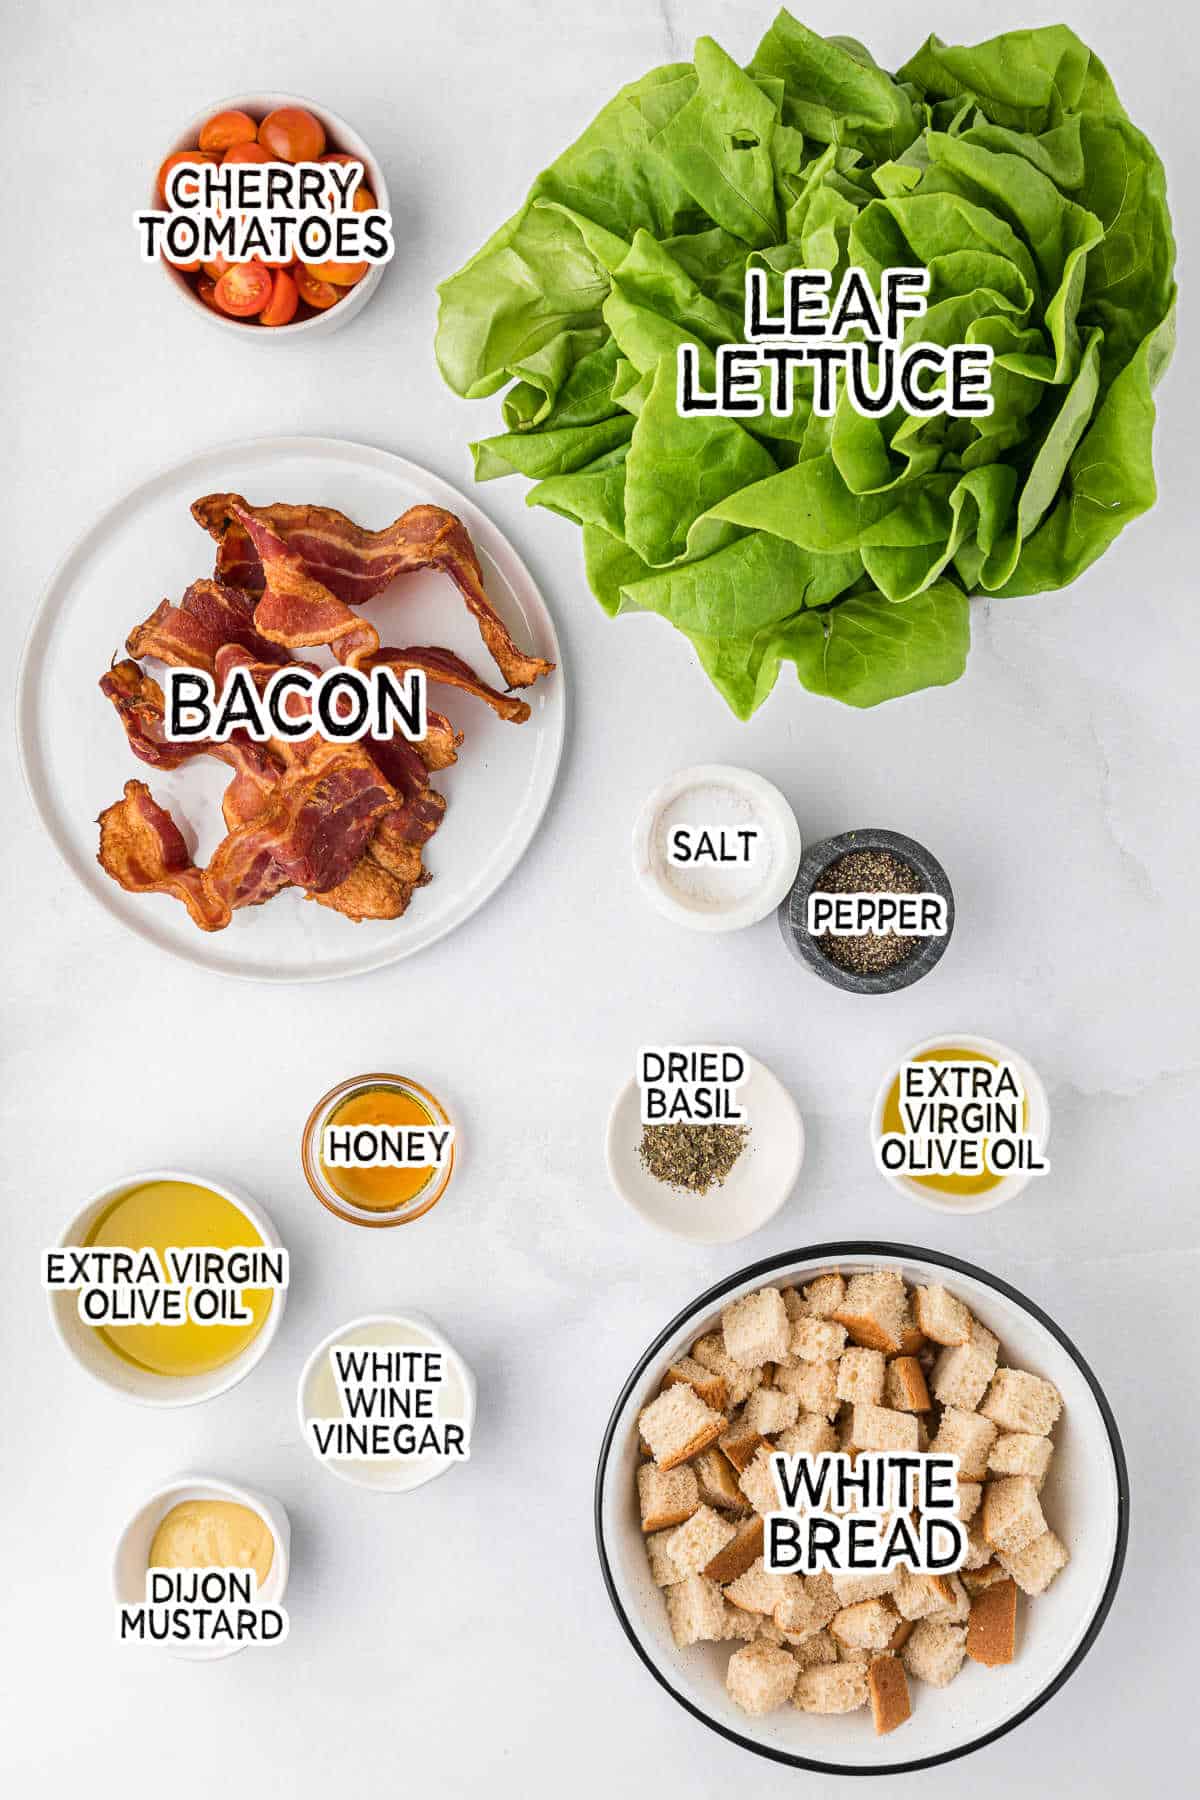 Ingredients to make BLT salad.